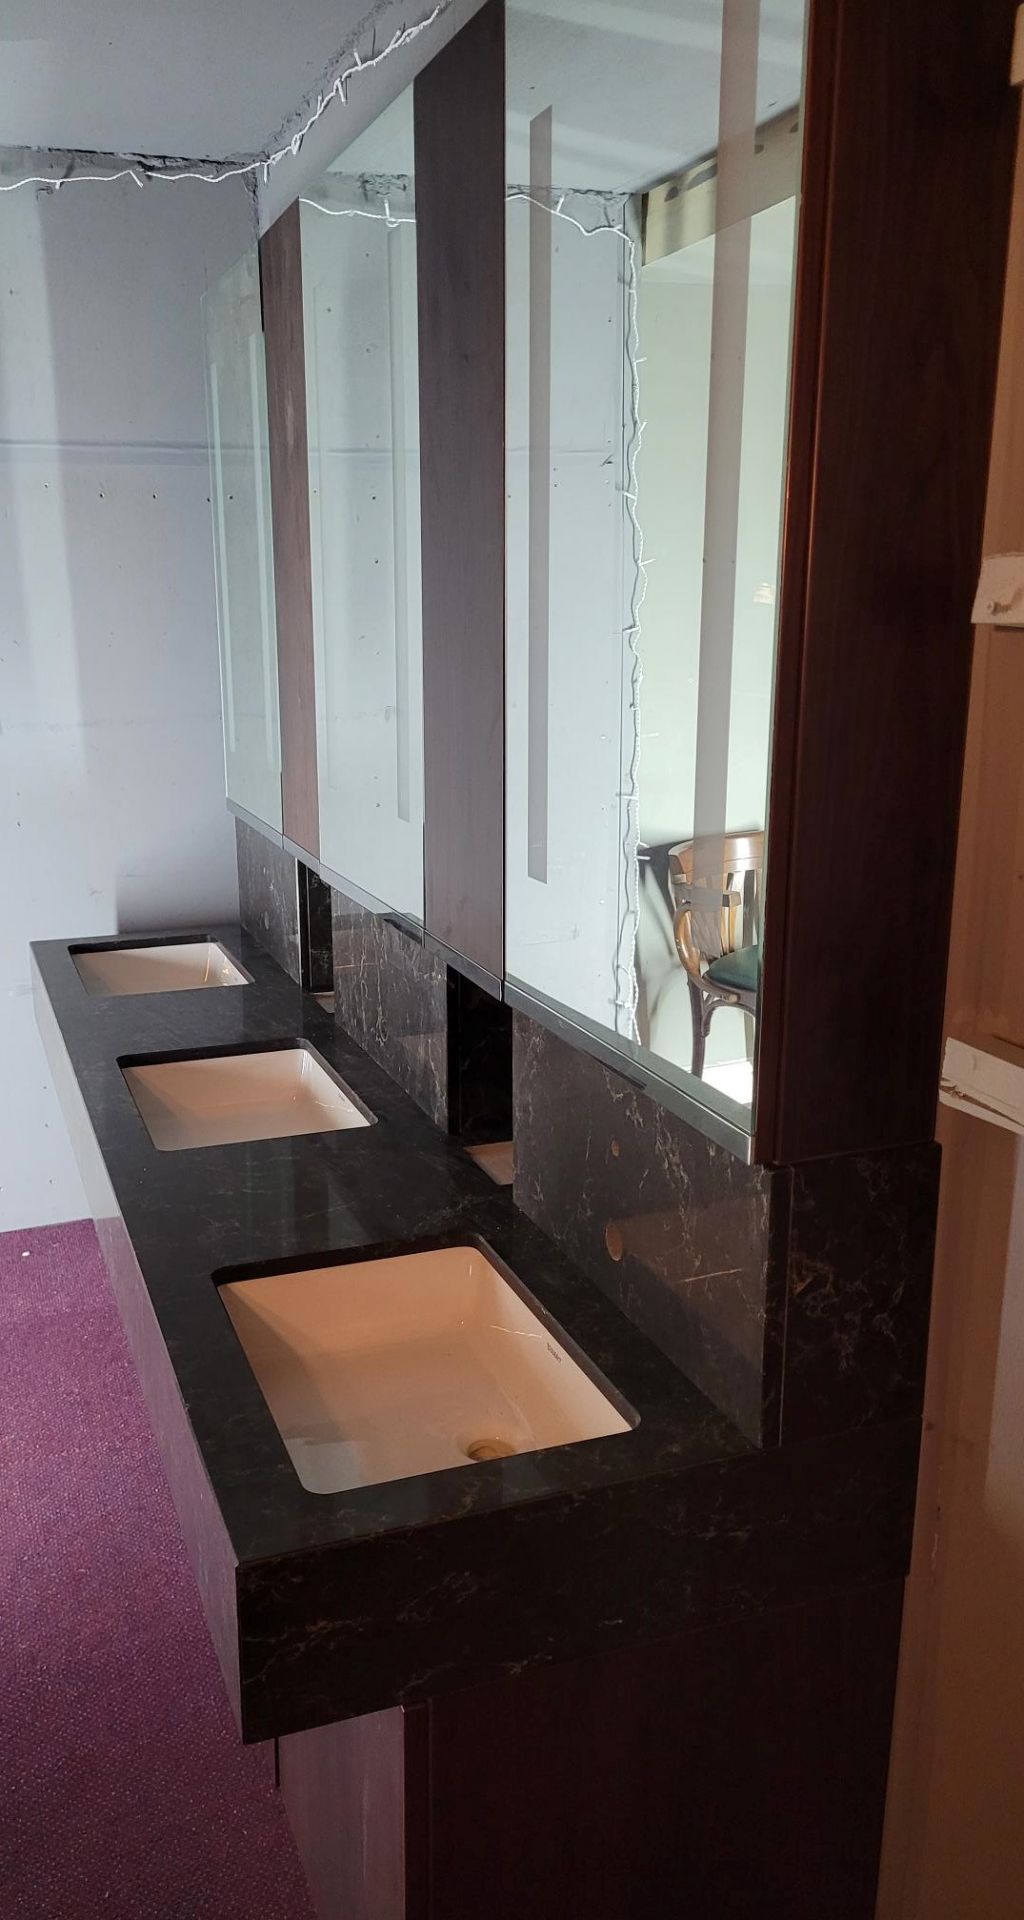 Bespoke triple basin black variegated granite bathroom sink unit, with mirrored cabinets, - Image 4 of 6